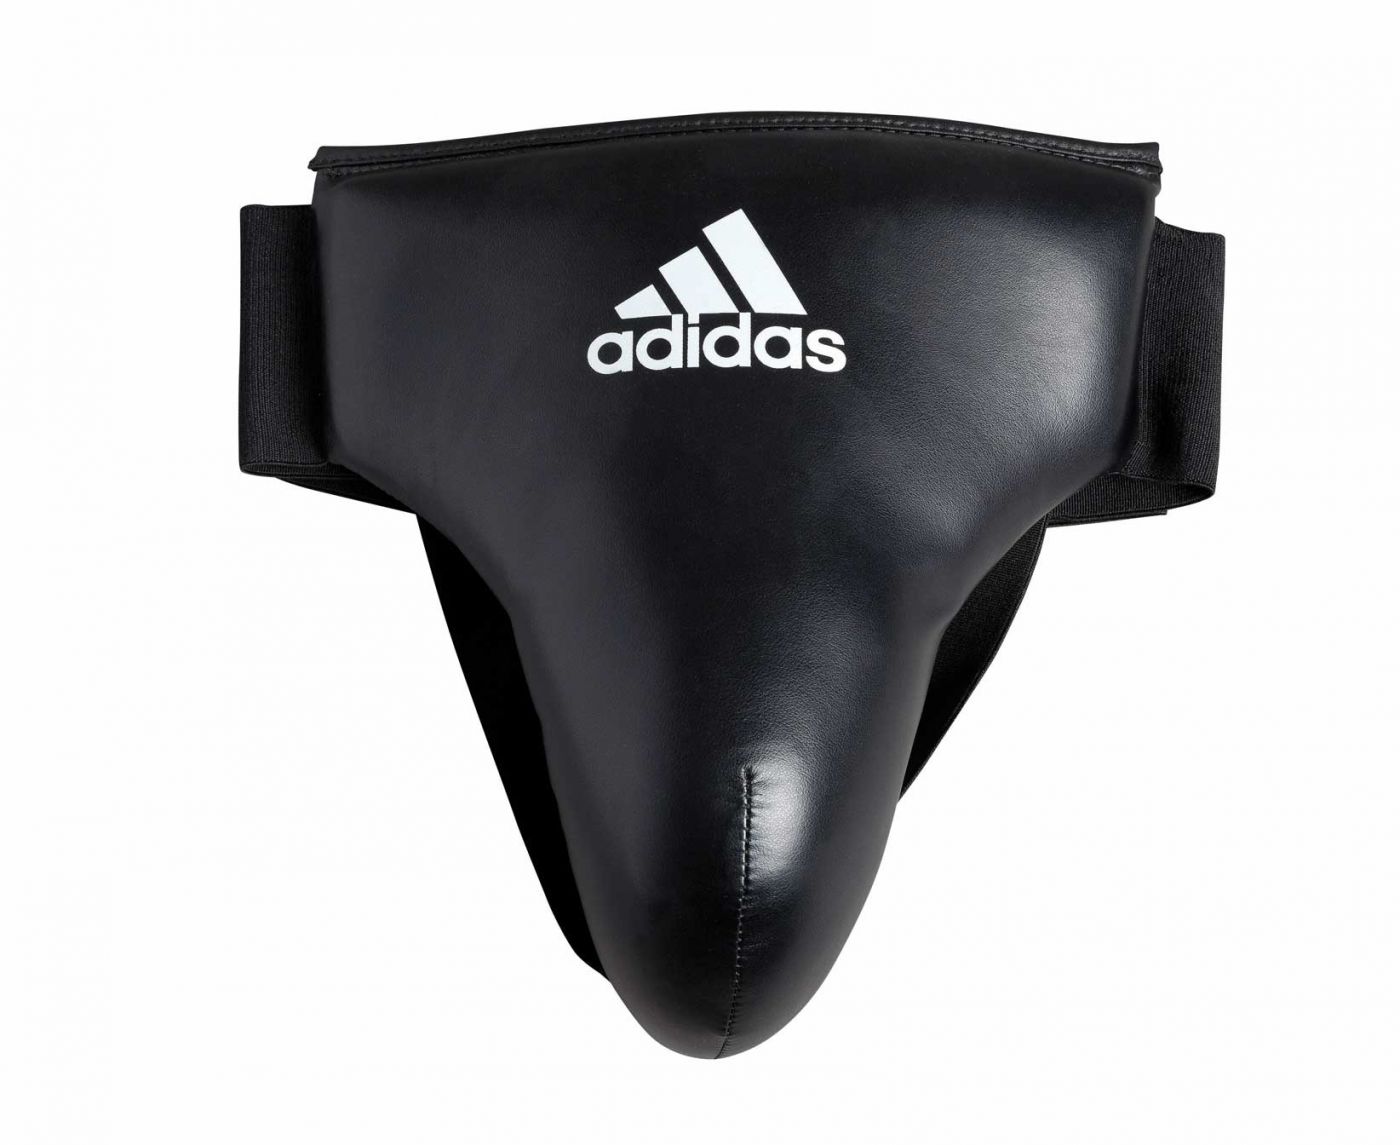 Защита паха Adidas мужская Anatomical Groin Guard черная, размер XL, артикул adiBP05